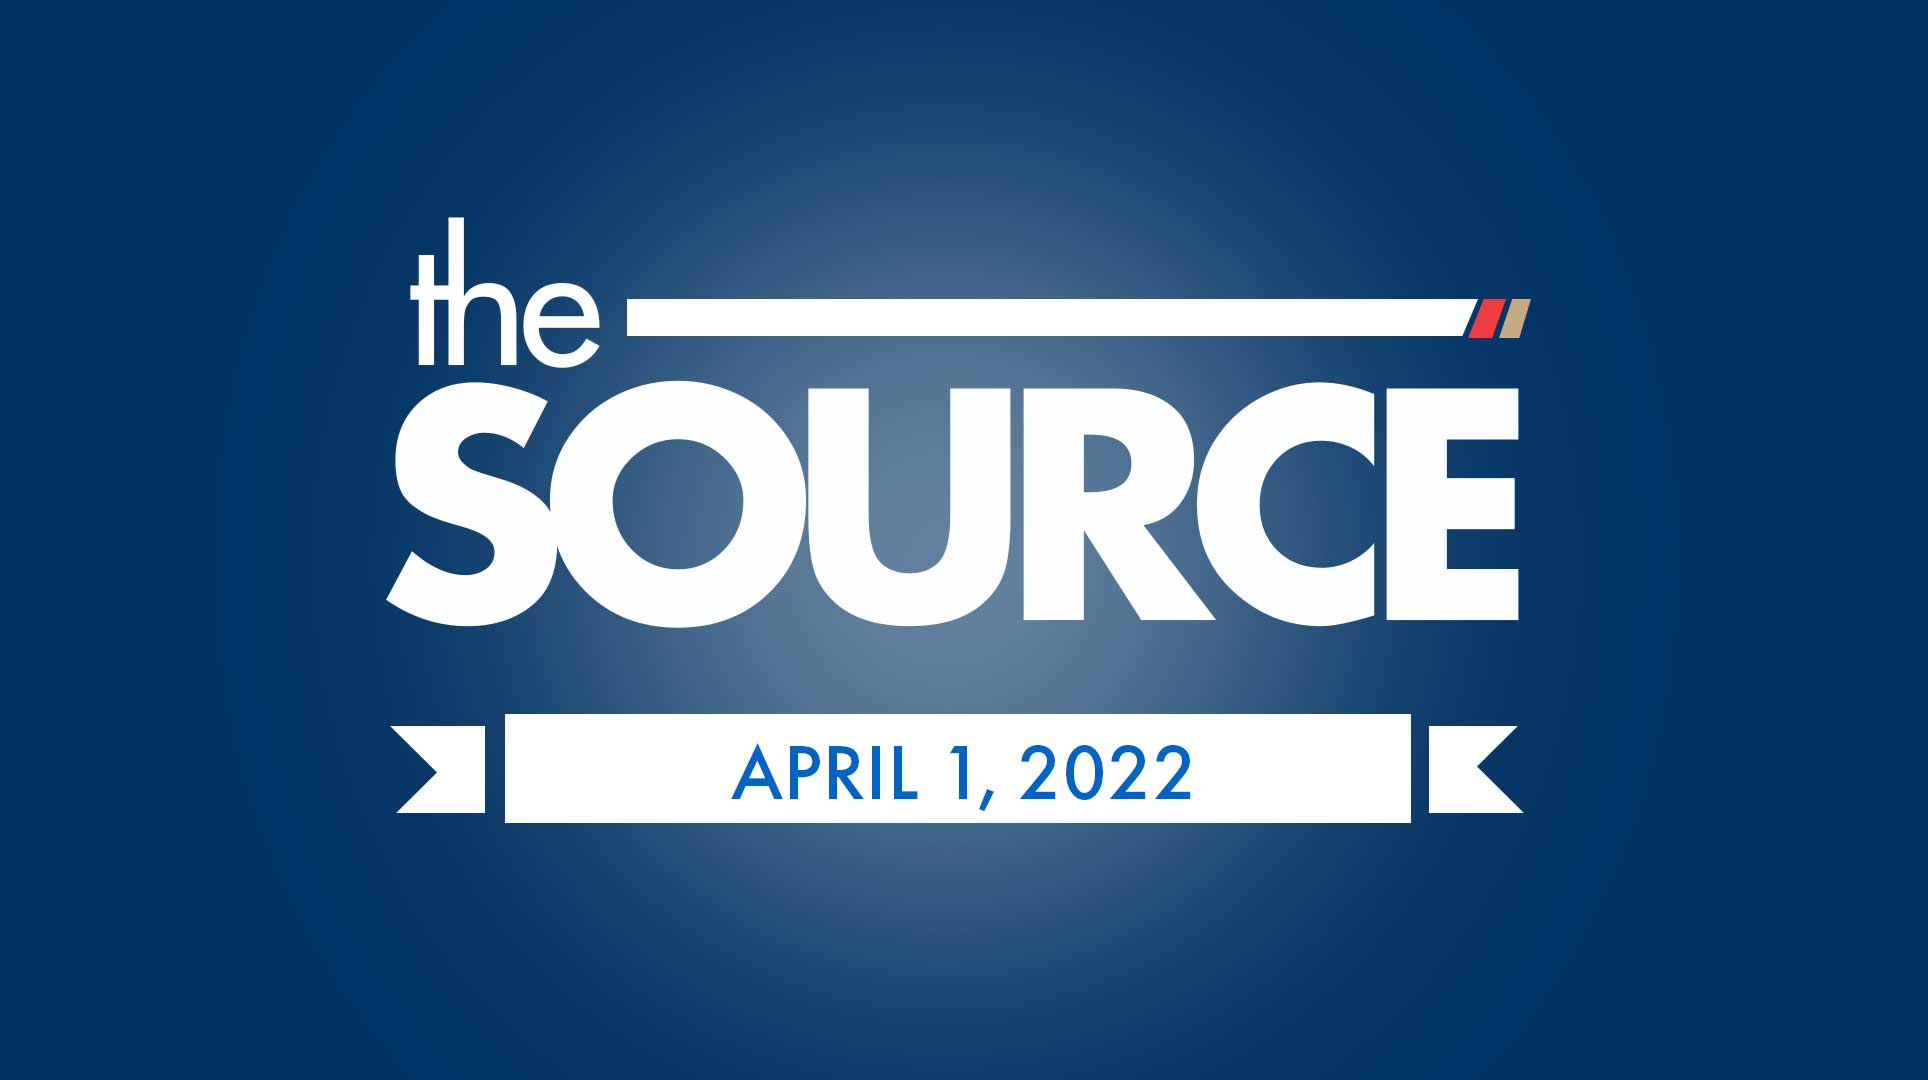 The Source - April 1, 2022